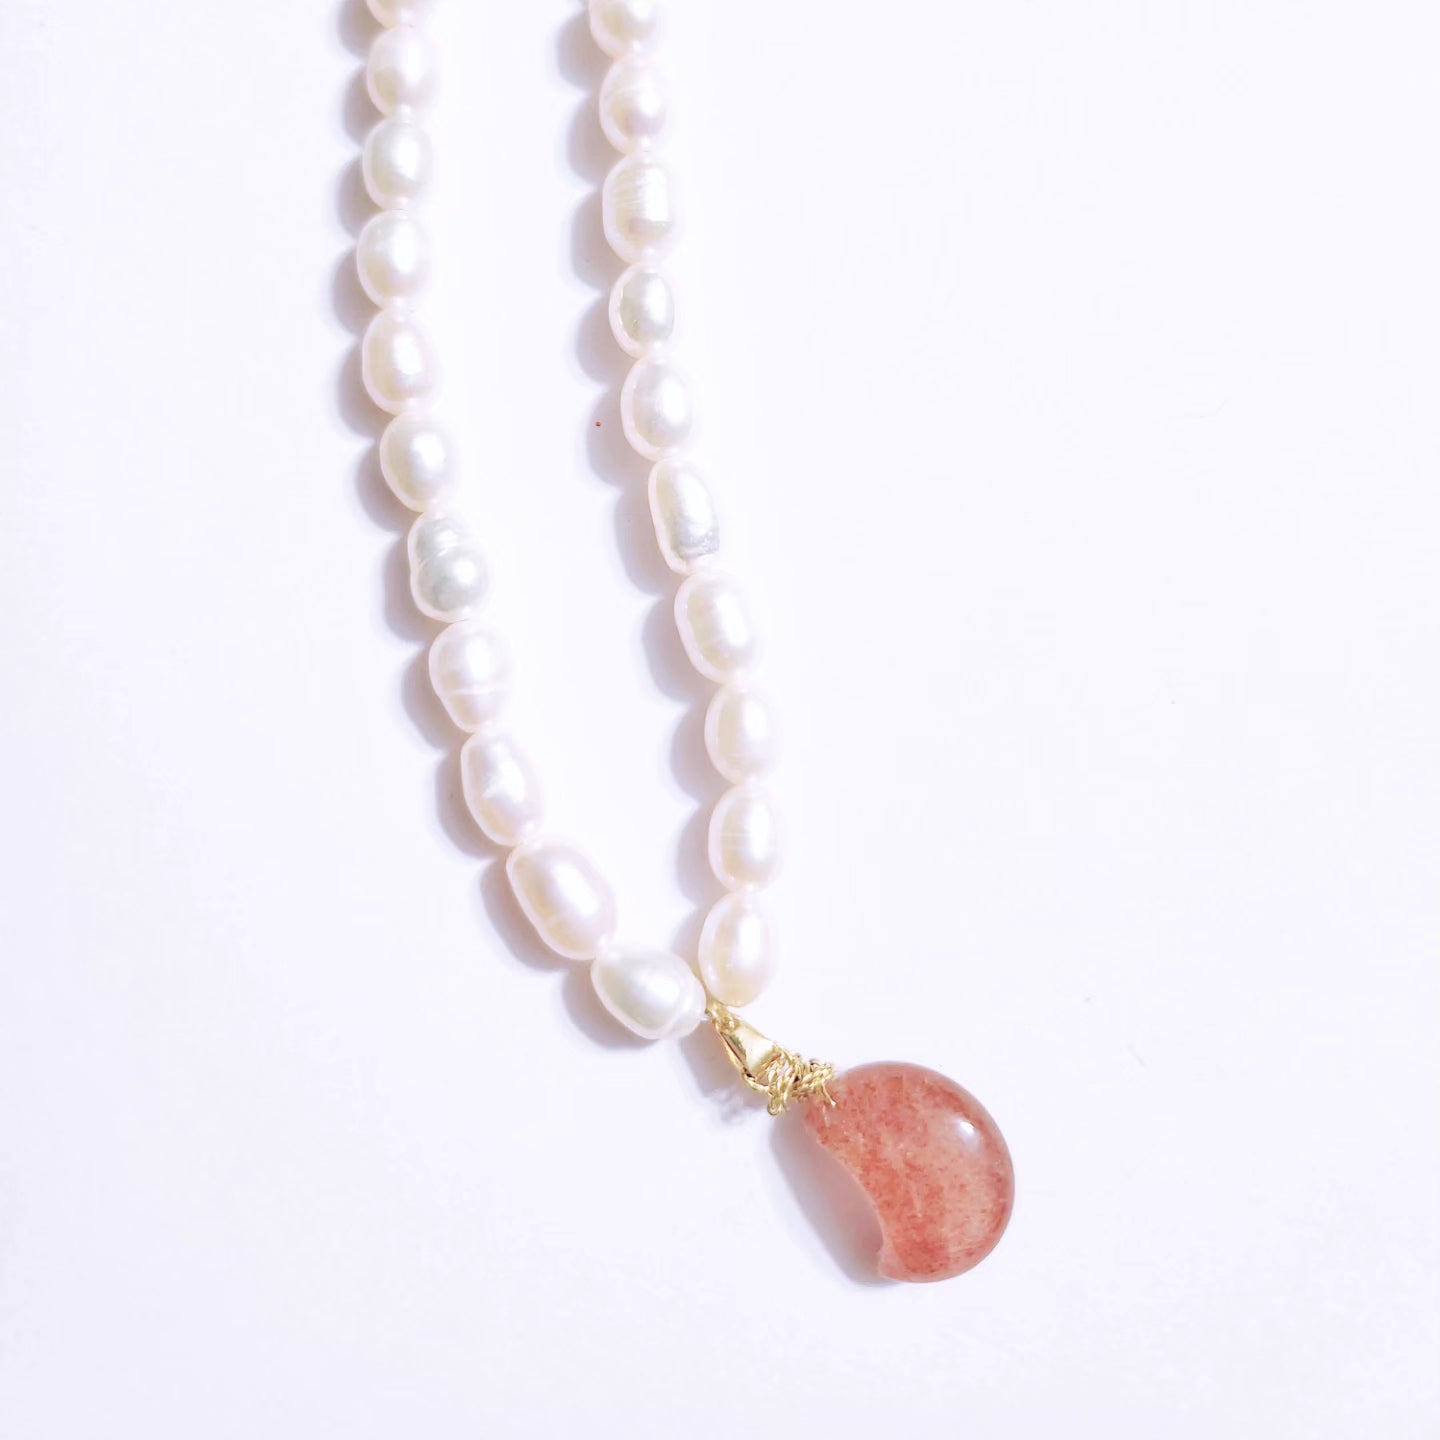 Handmade Crystal Necklace- Strawberry Moon Night